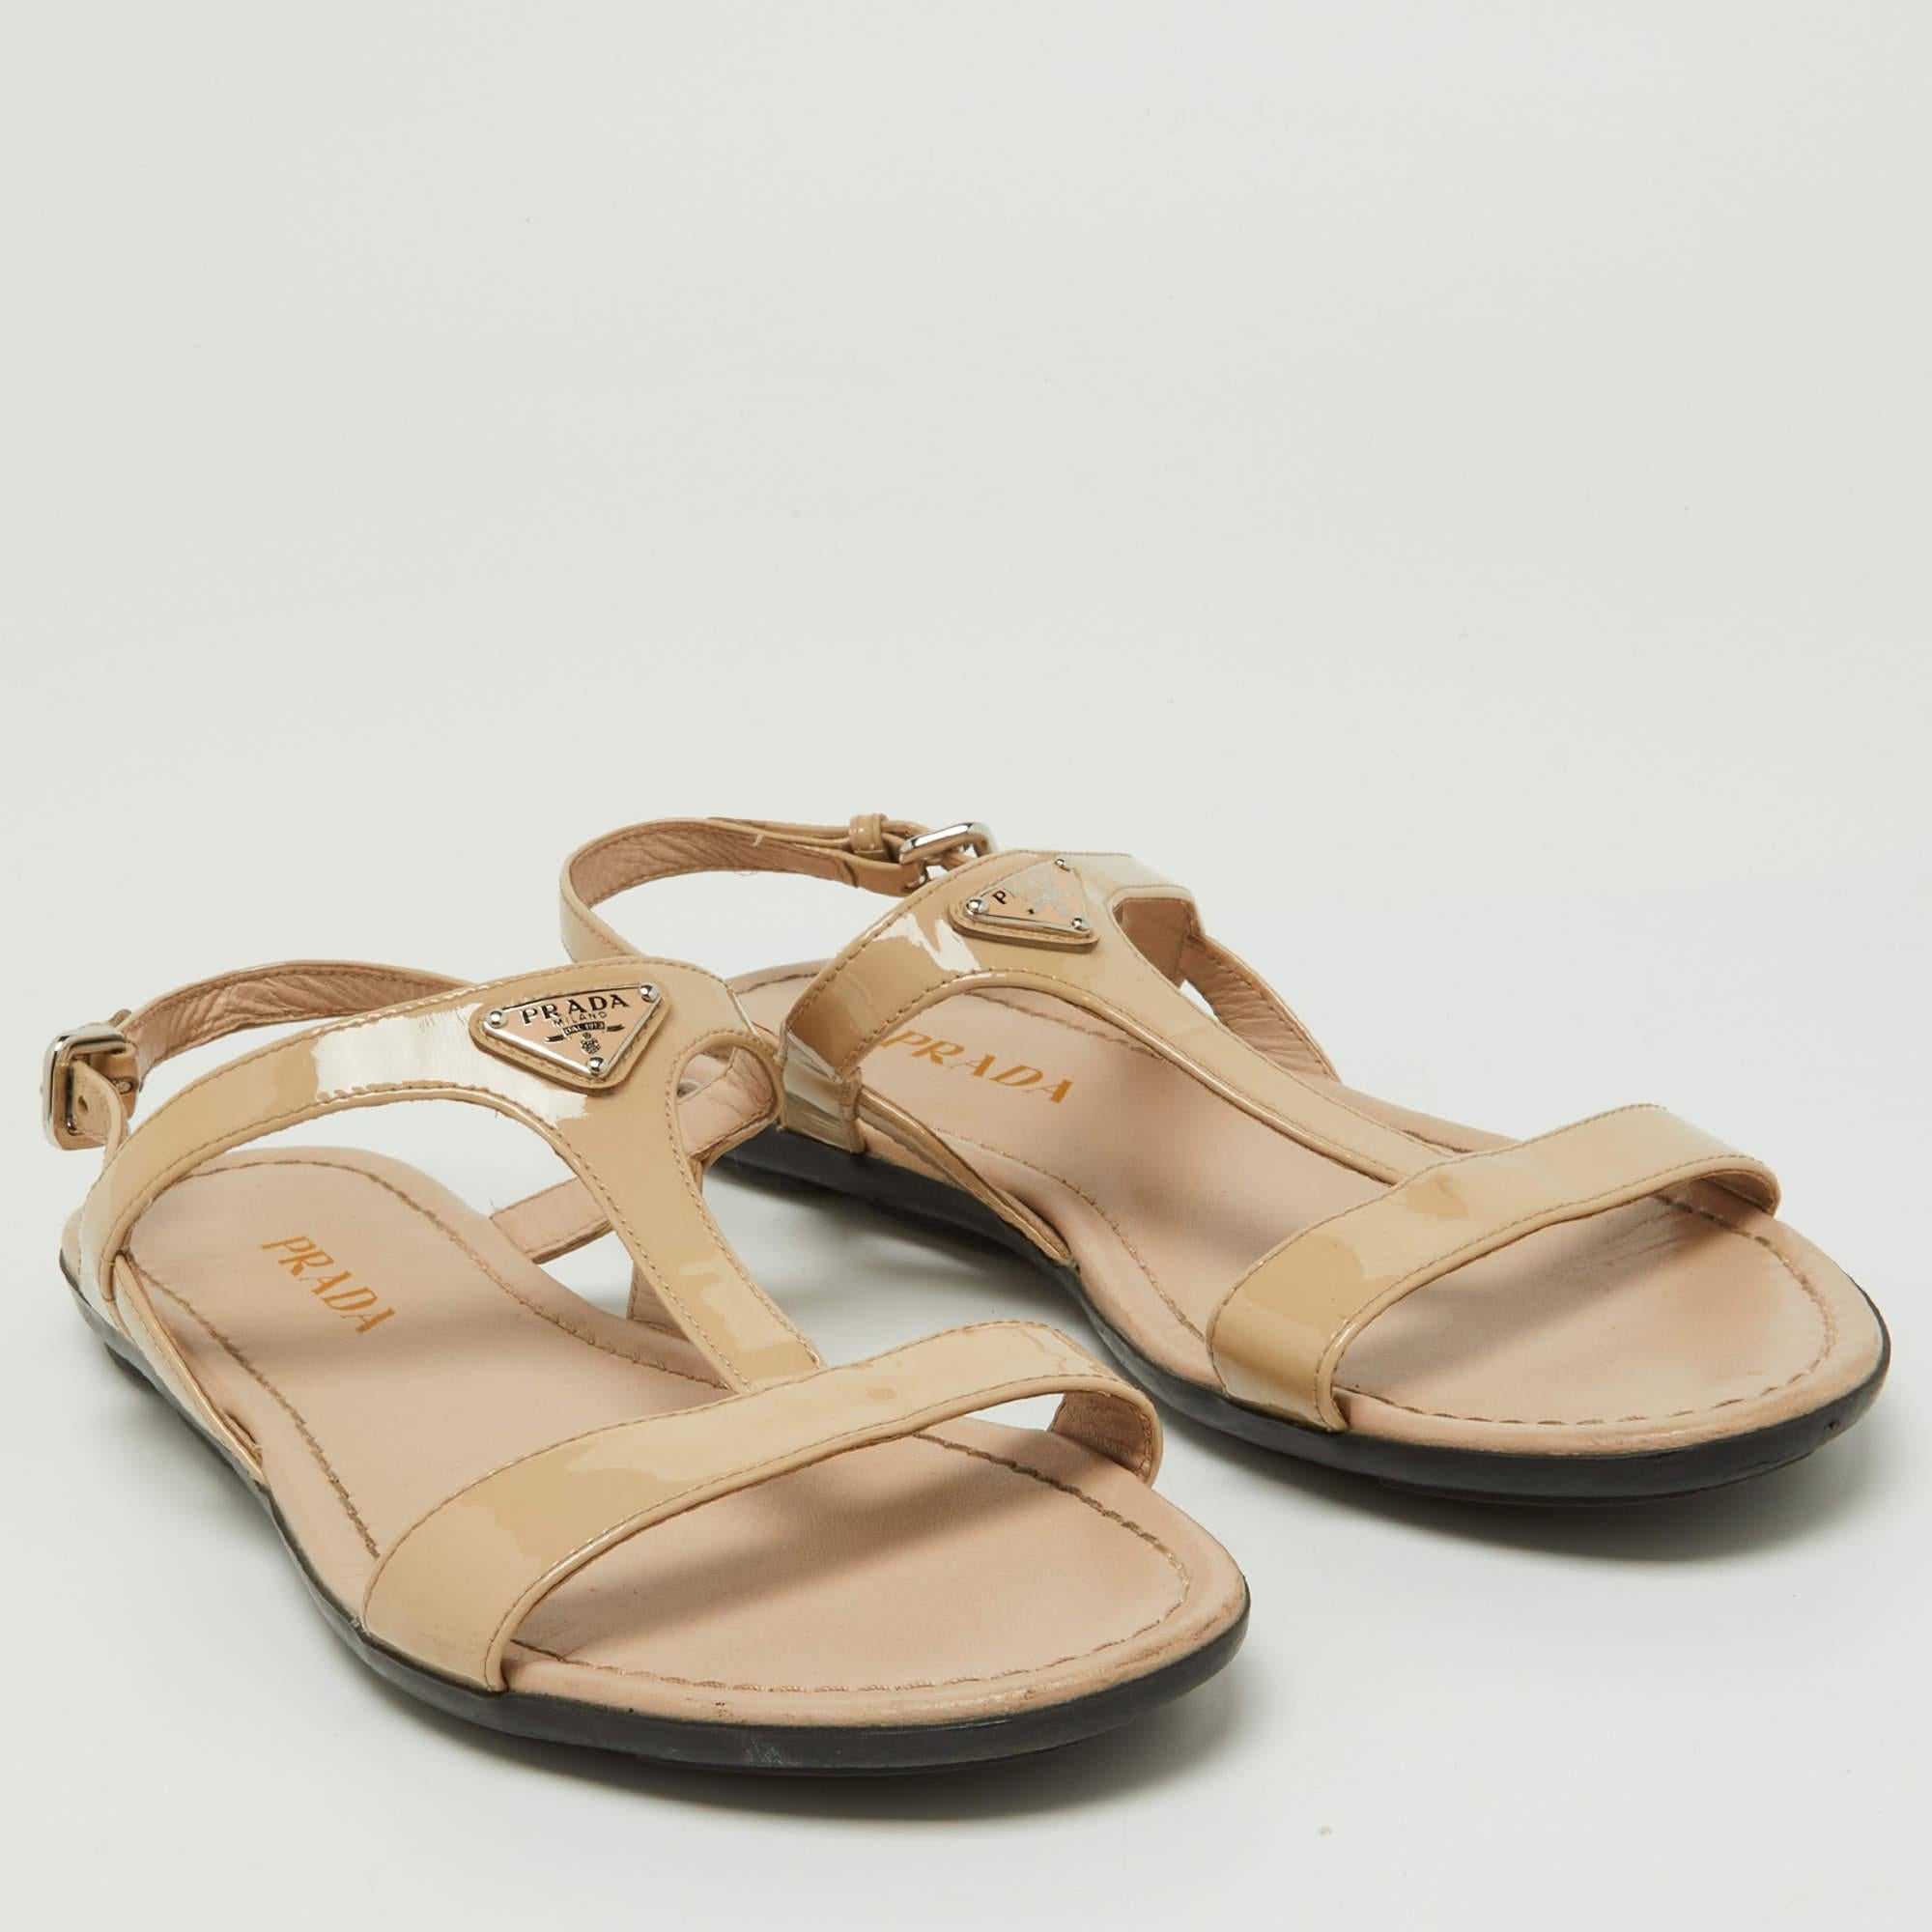 Prada Beige Patent Leather Flat Sandals Size 39 3